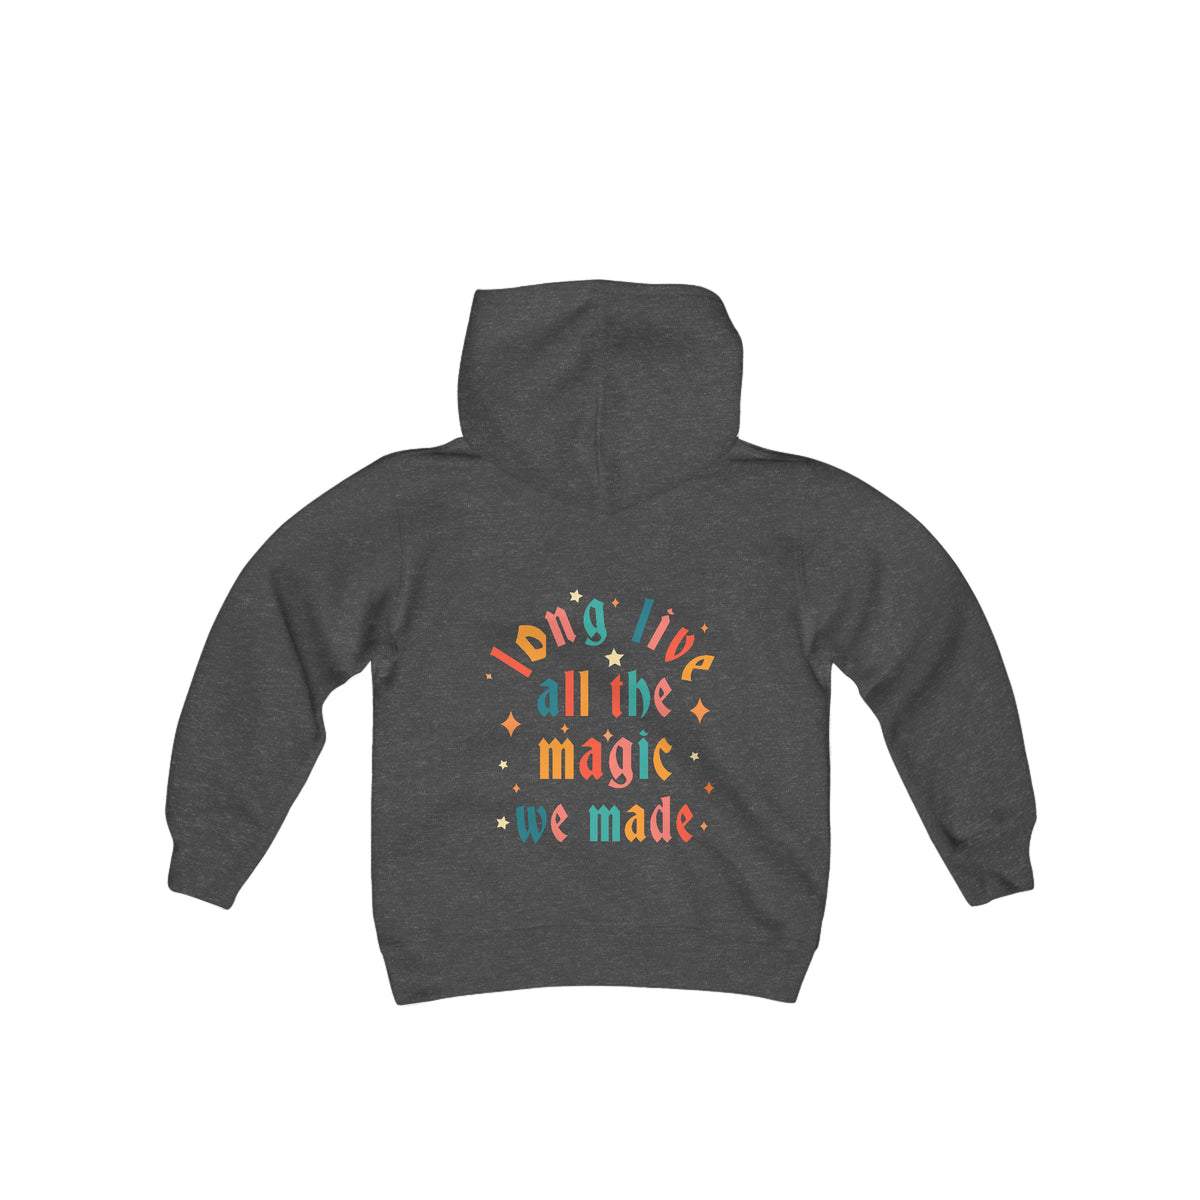 Long Live All The Magic We Made Gildan Youth Heavy Blend Hooded Sweatshirt